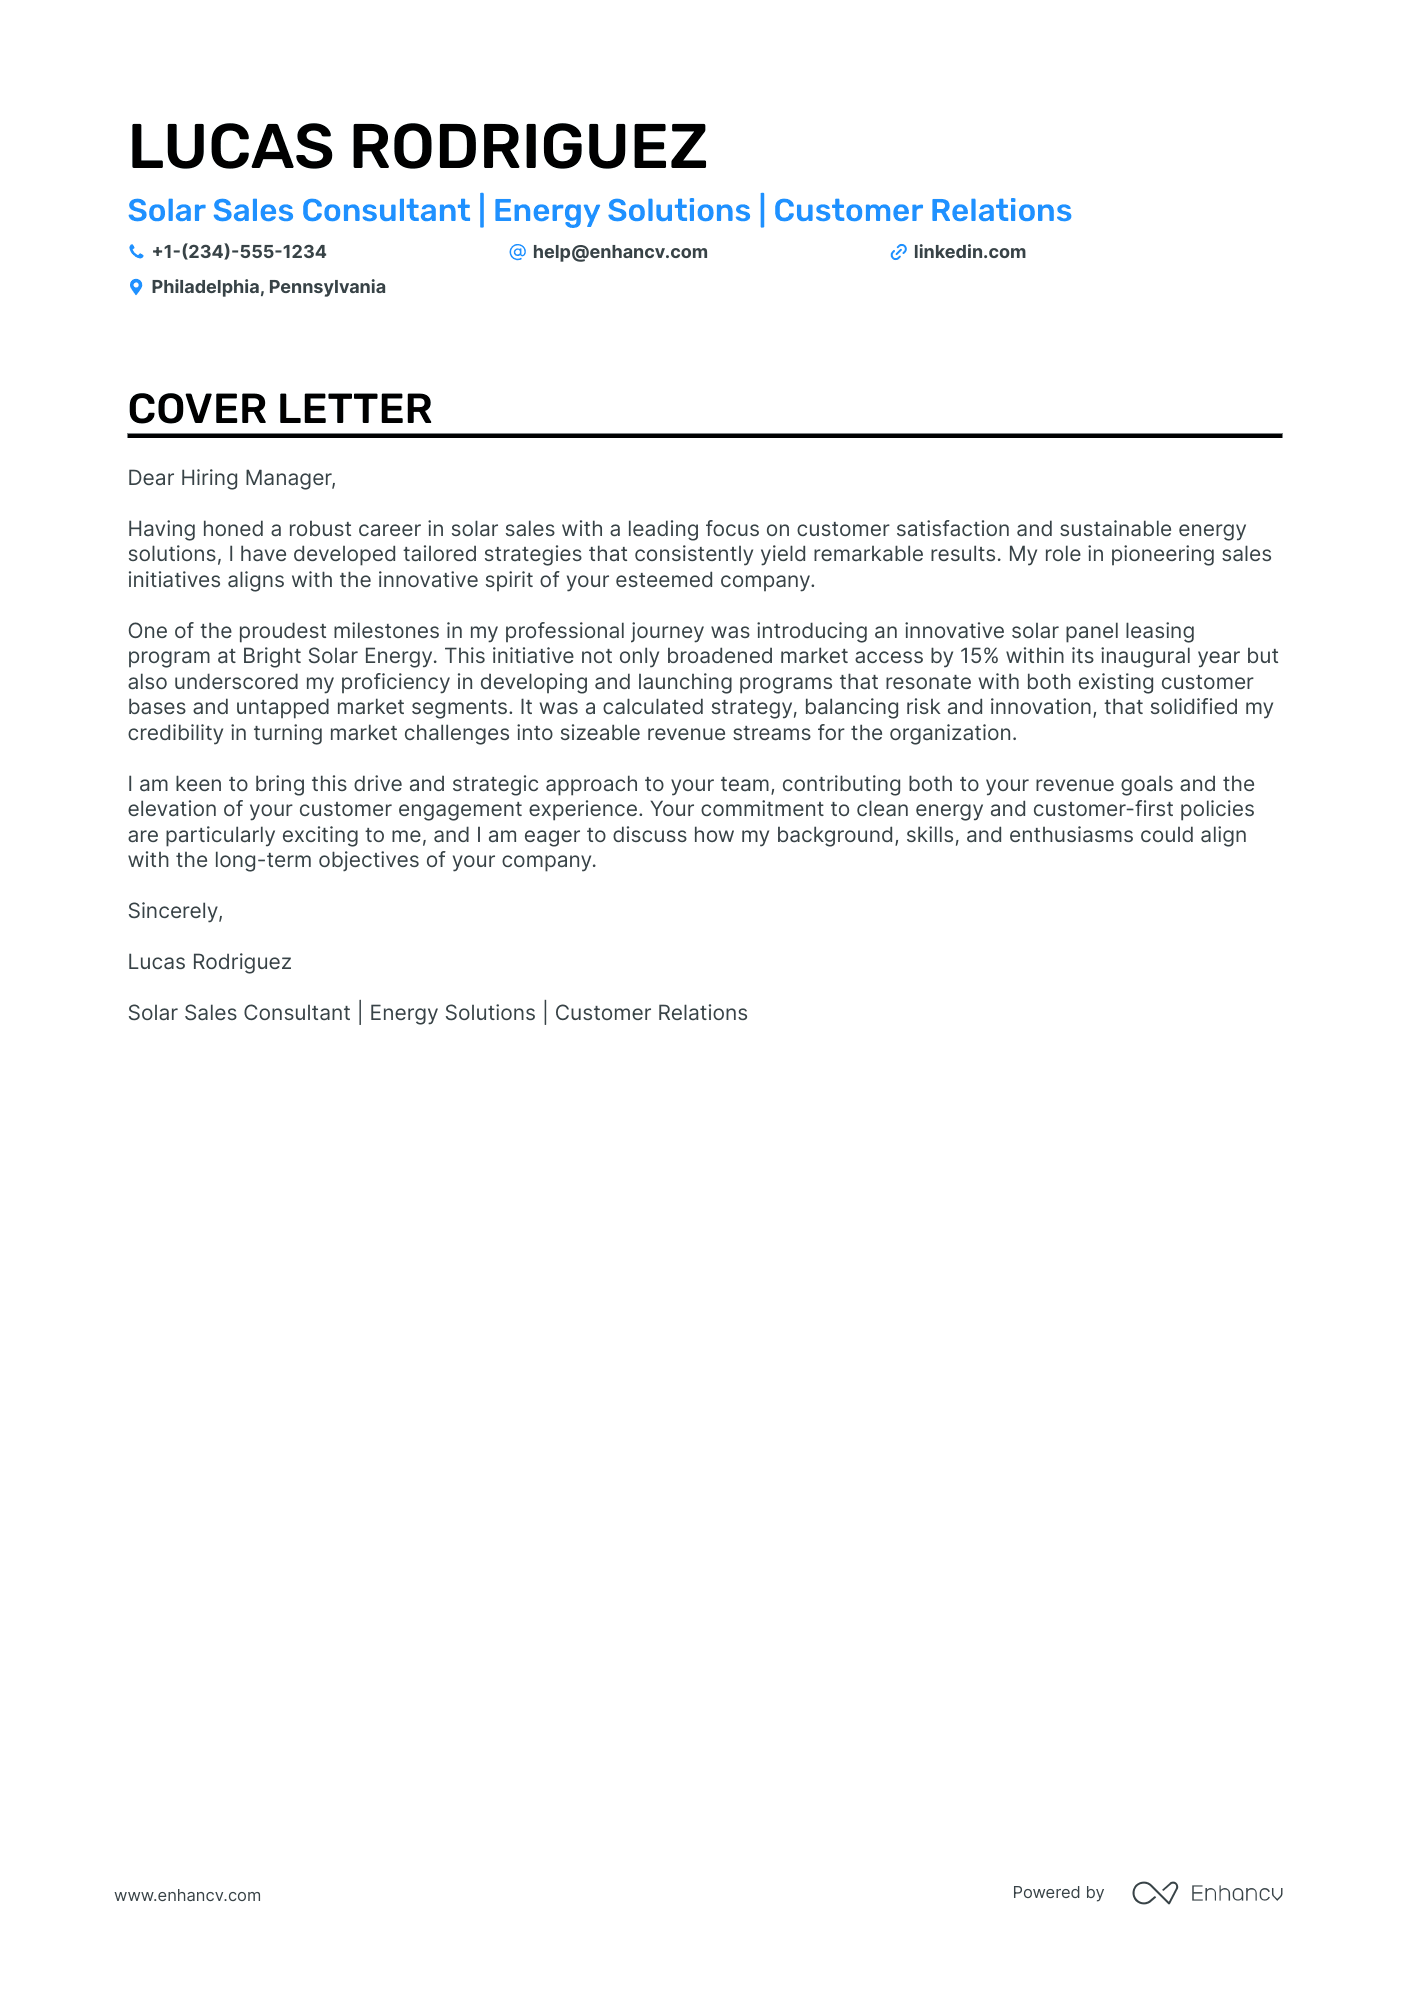 Solar Sales cover letter